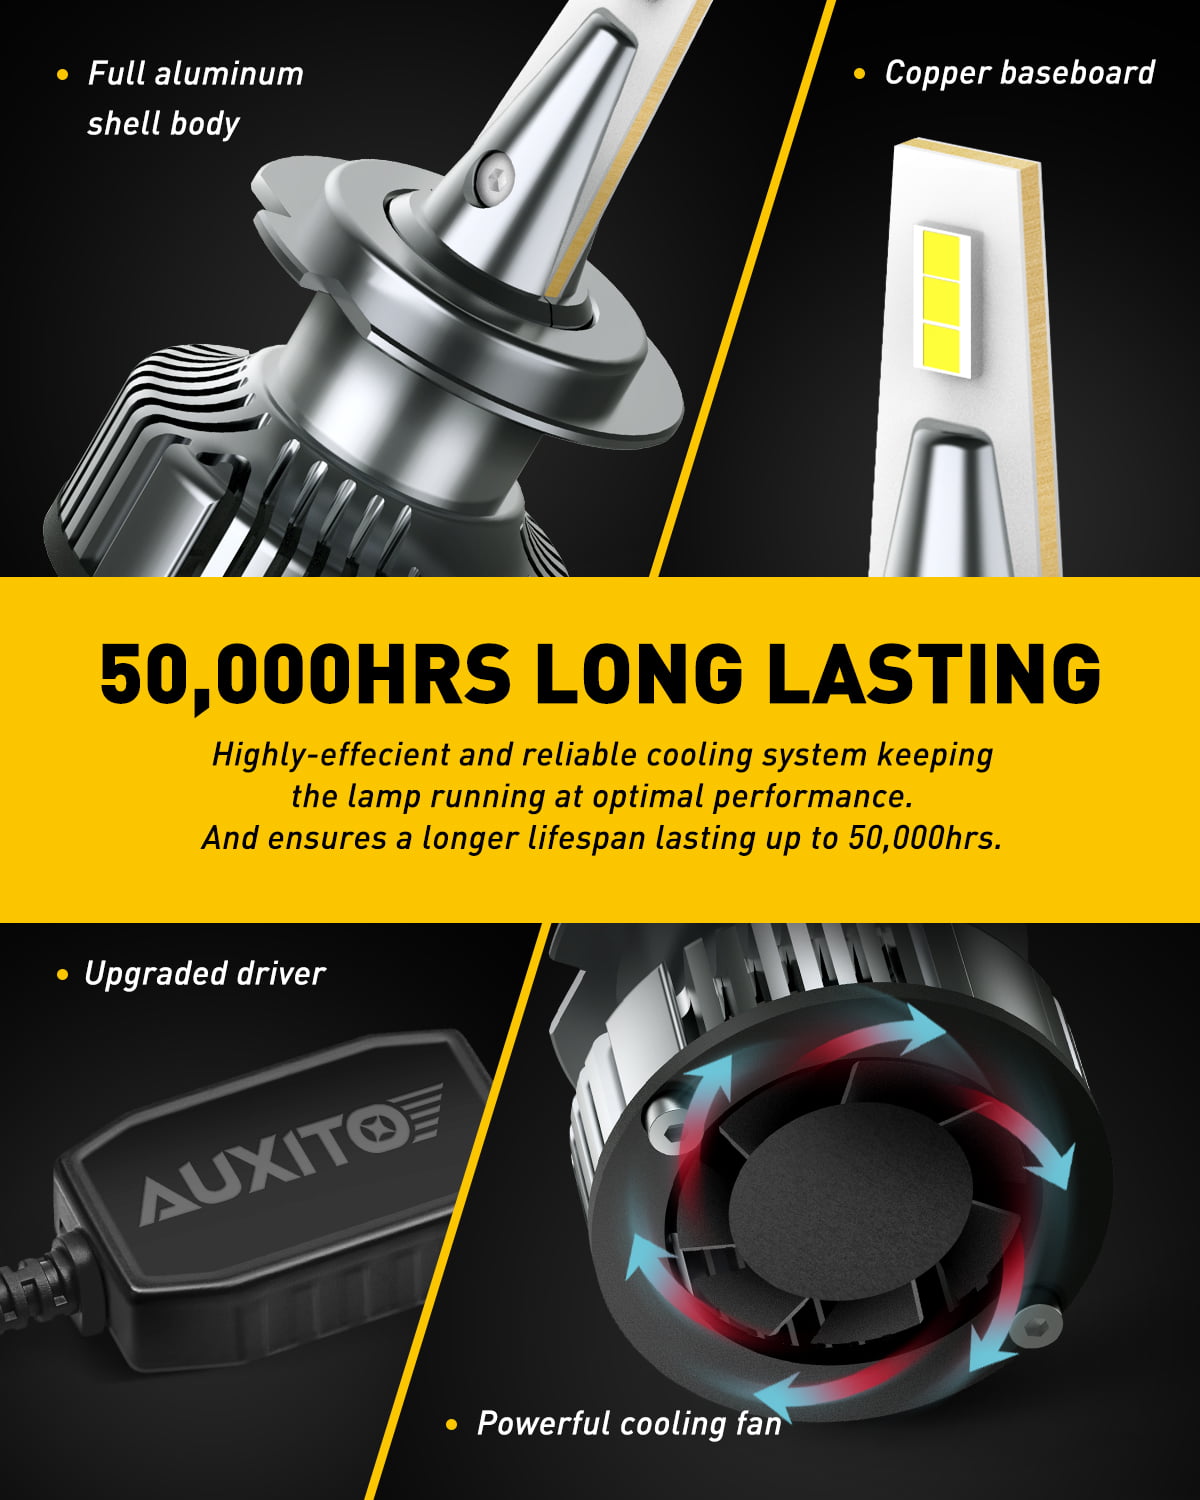 AUXITO H7 LED Headlight Bulbs, 500% Brightness 80W 16000LM, 6500K